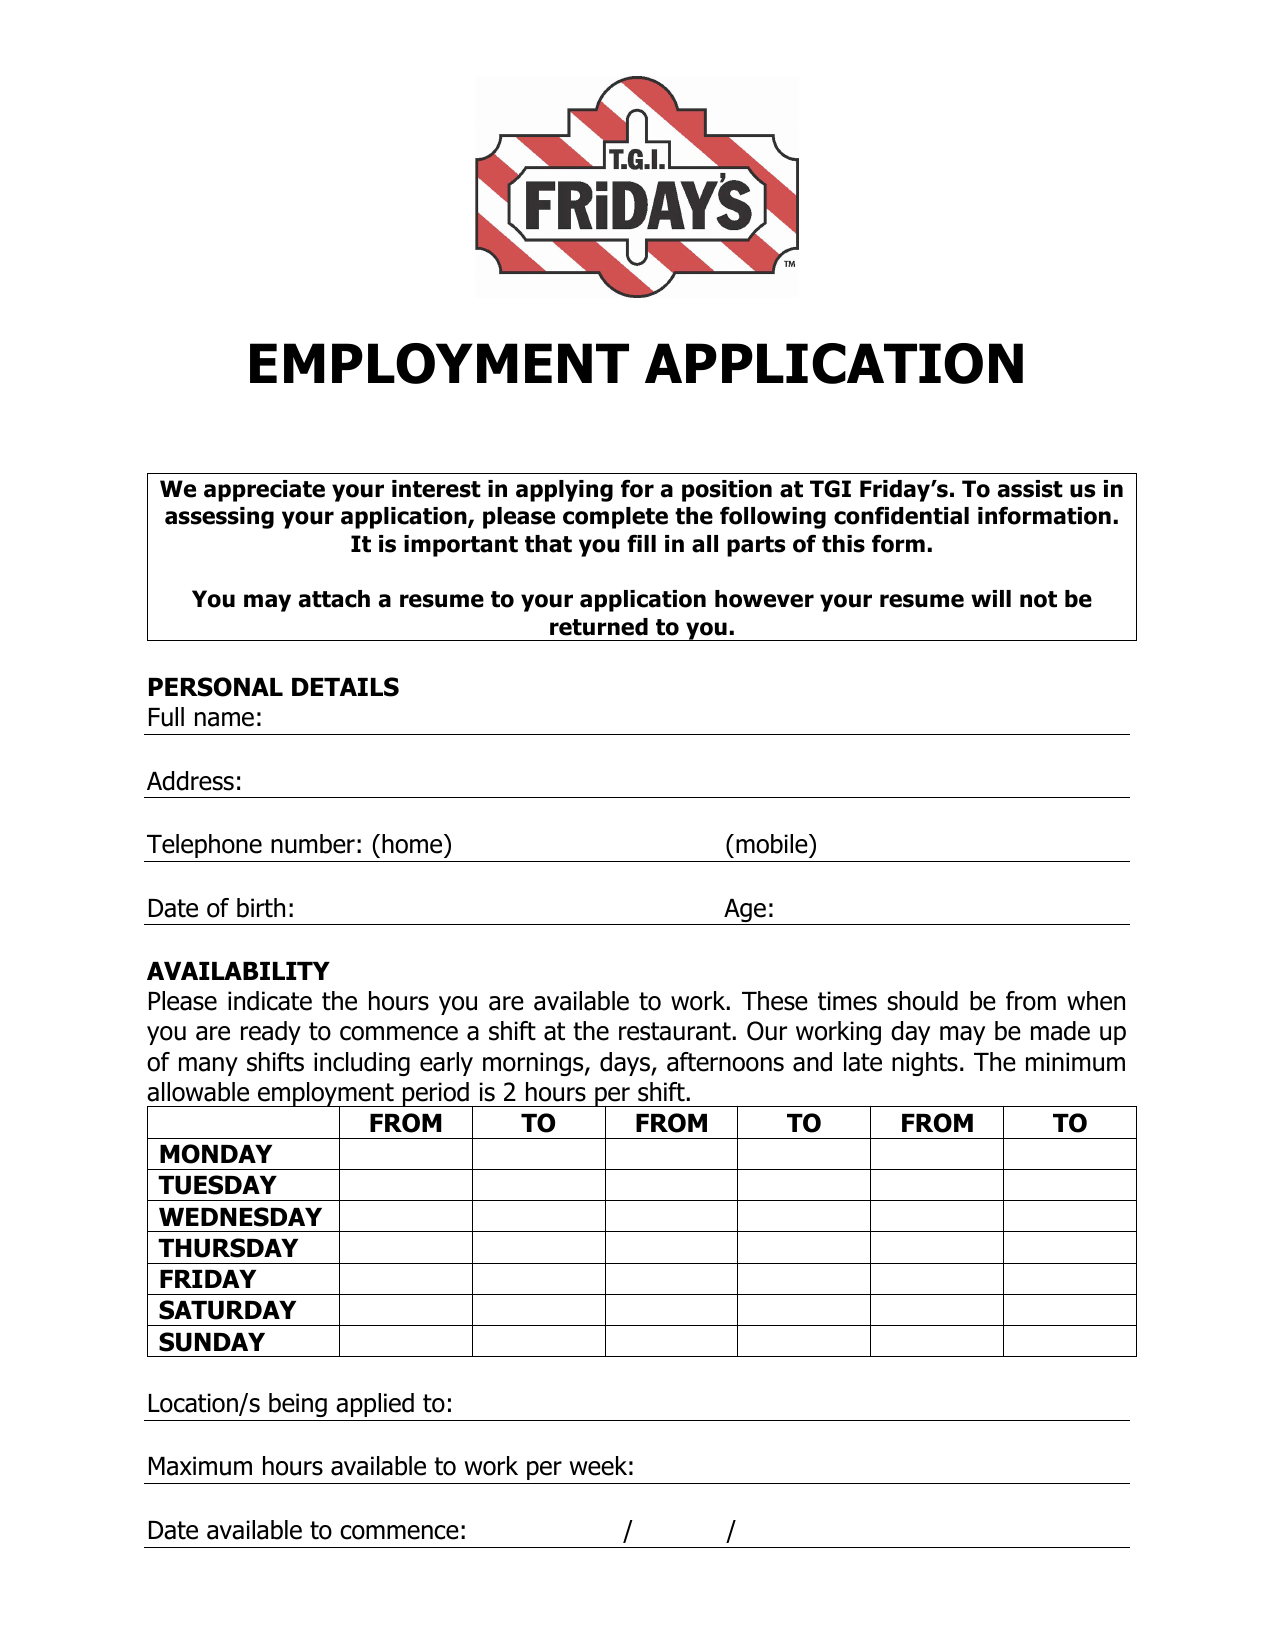 Open availability job application